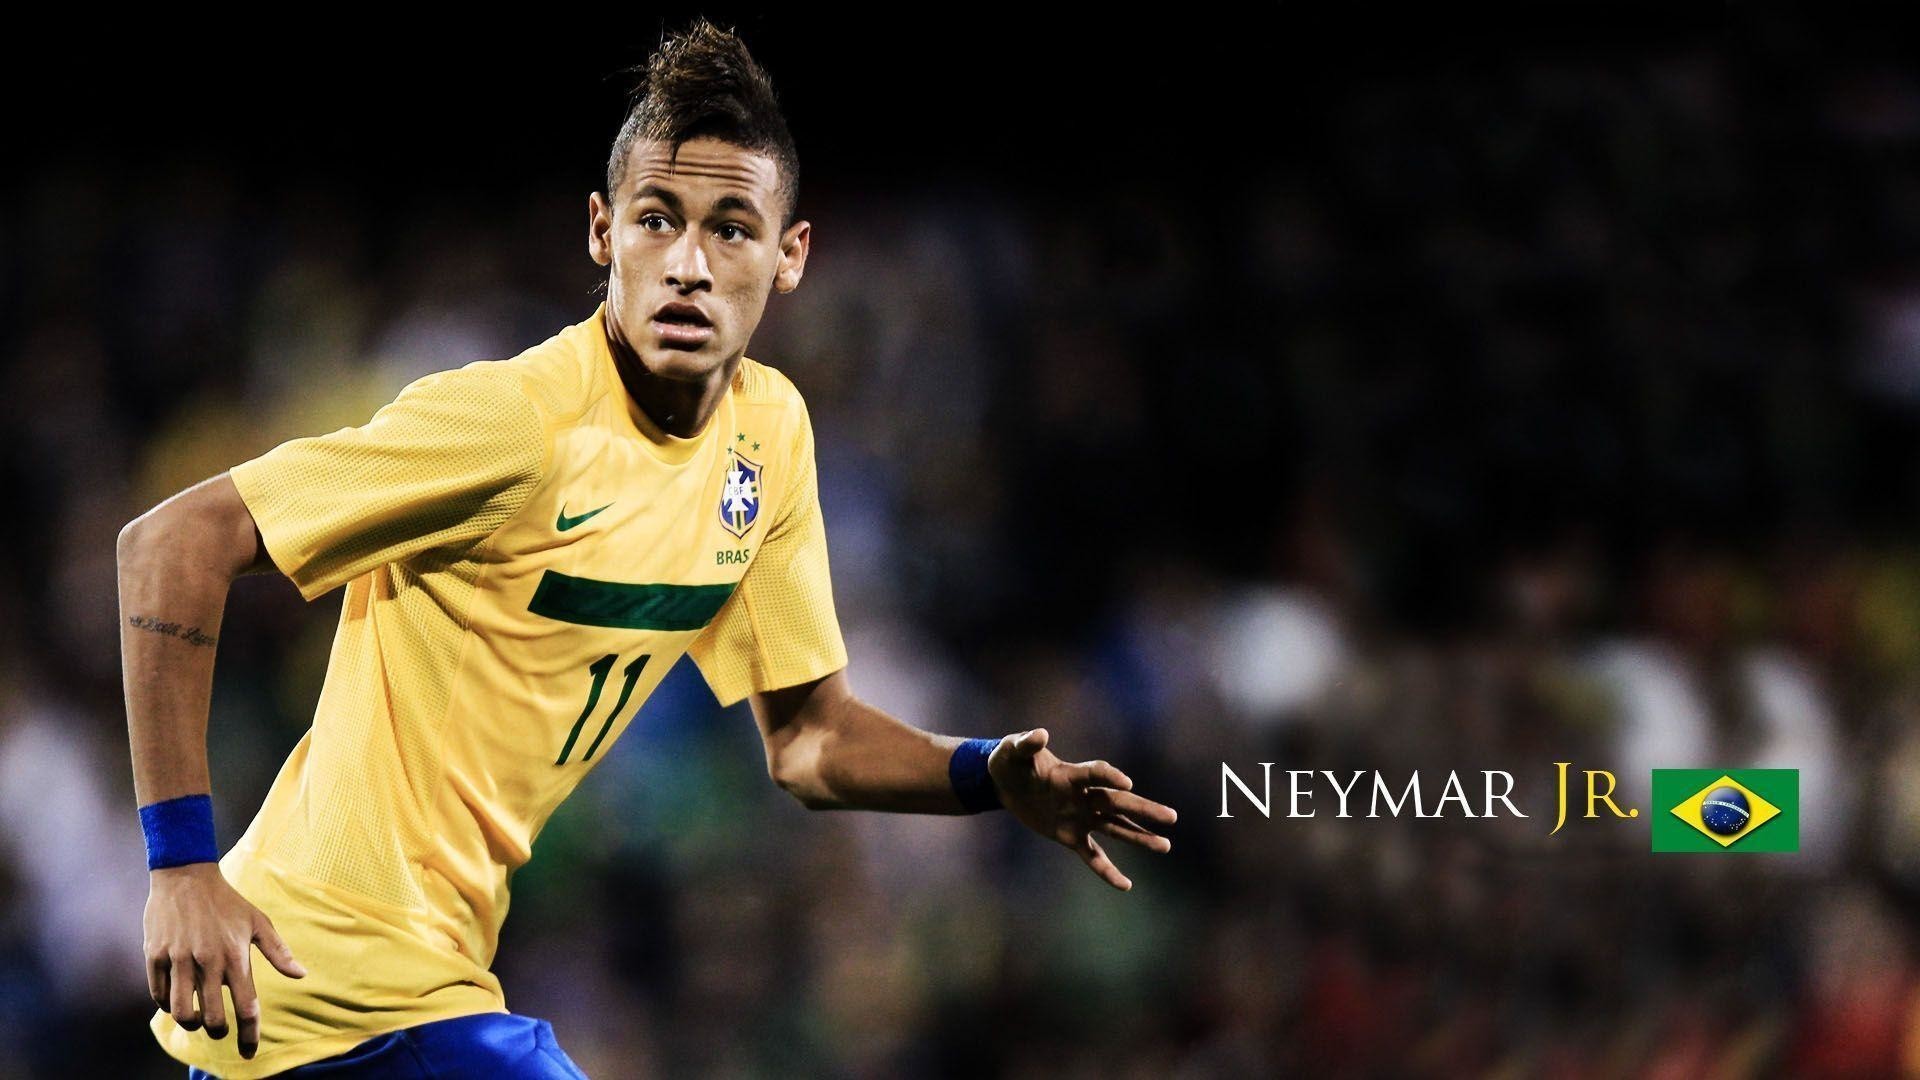 Neymar Brazil 2014 Scoring Wallpaper - Neymar Santos Da Silva 2013 -  1920x1080 Wallpaper 